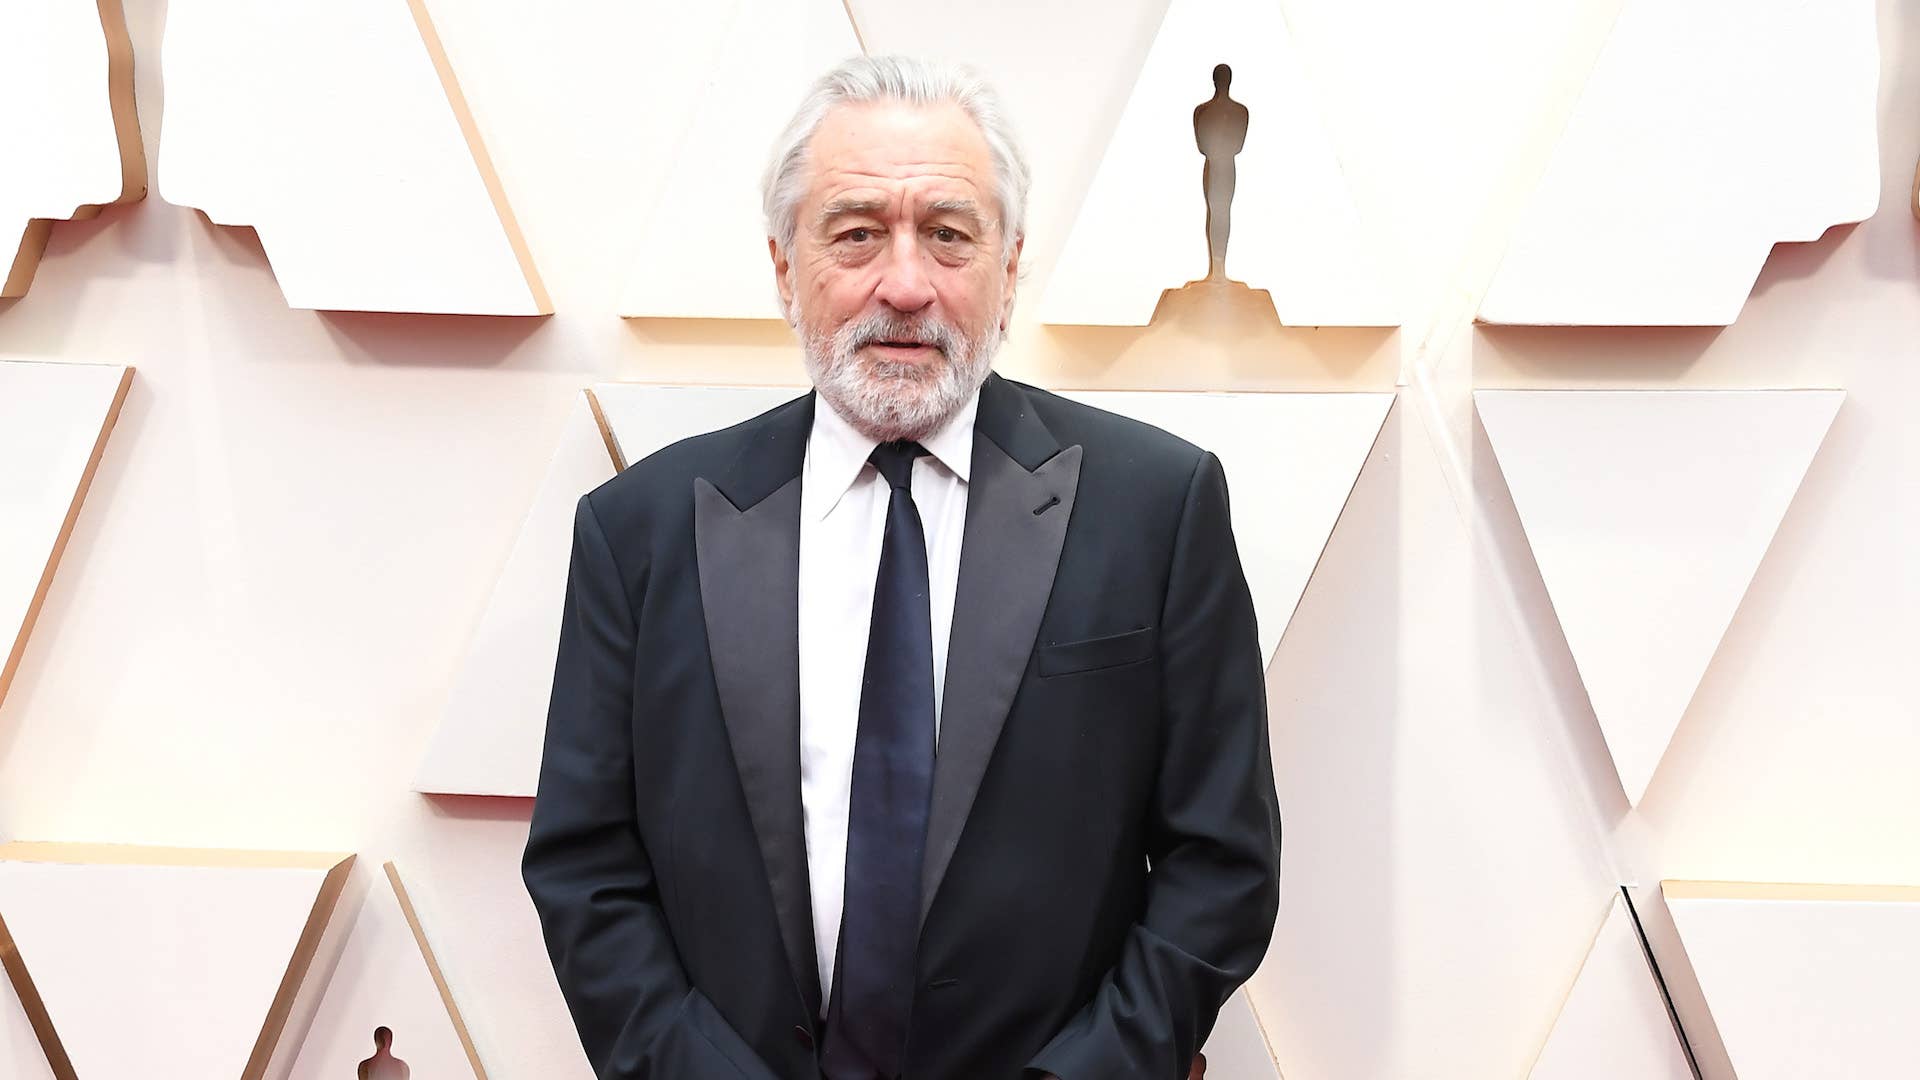 Robert De Niro arrives at the 92nd Annual Academy Awards